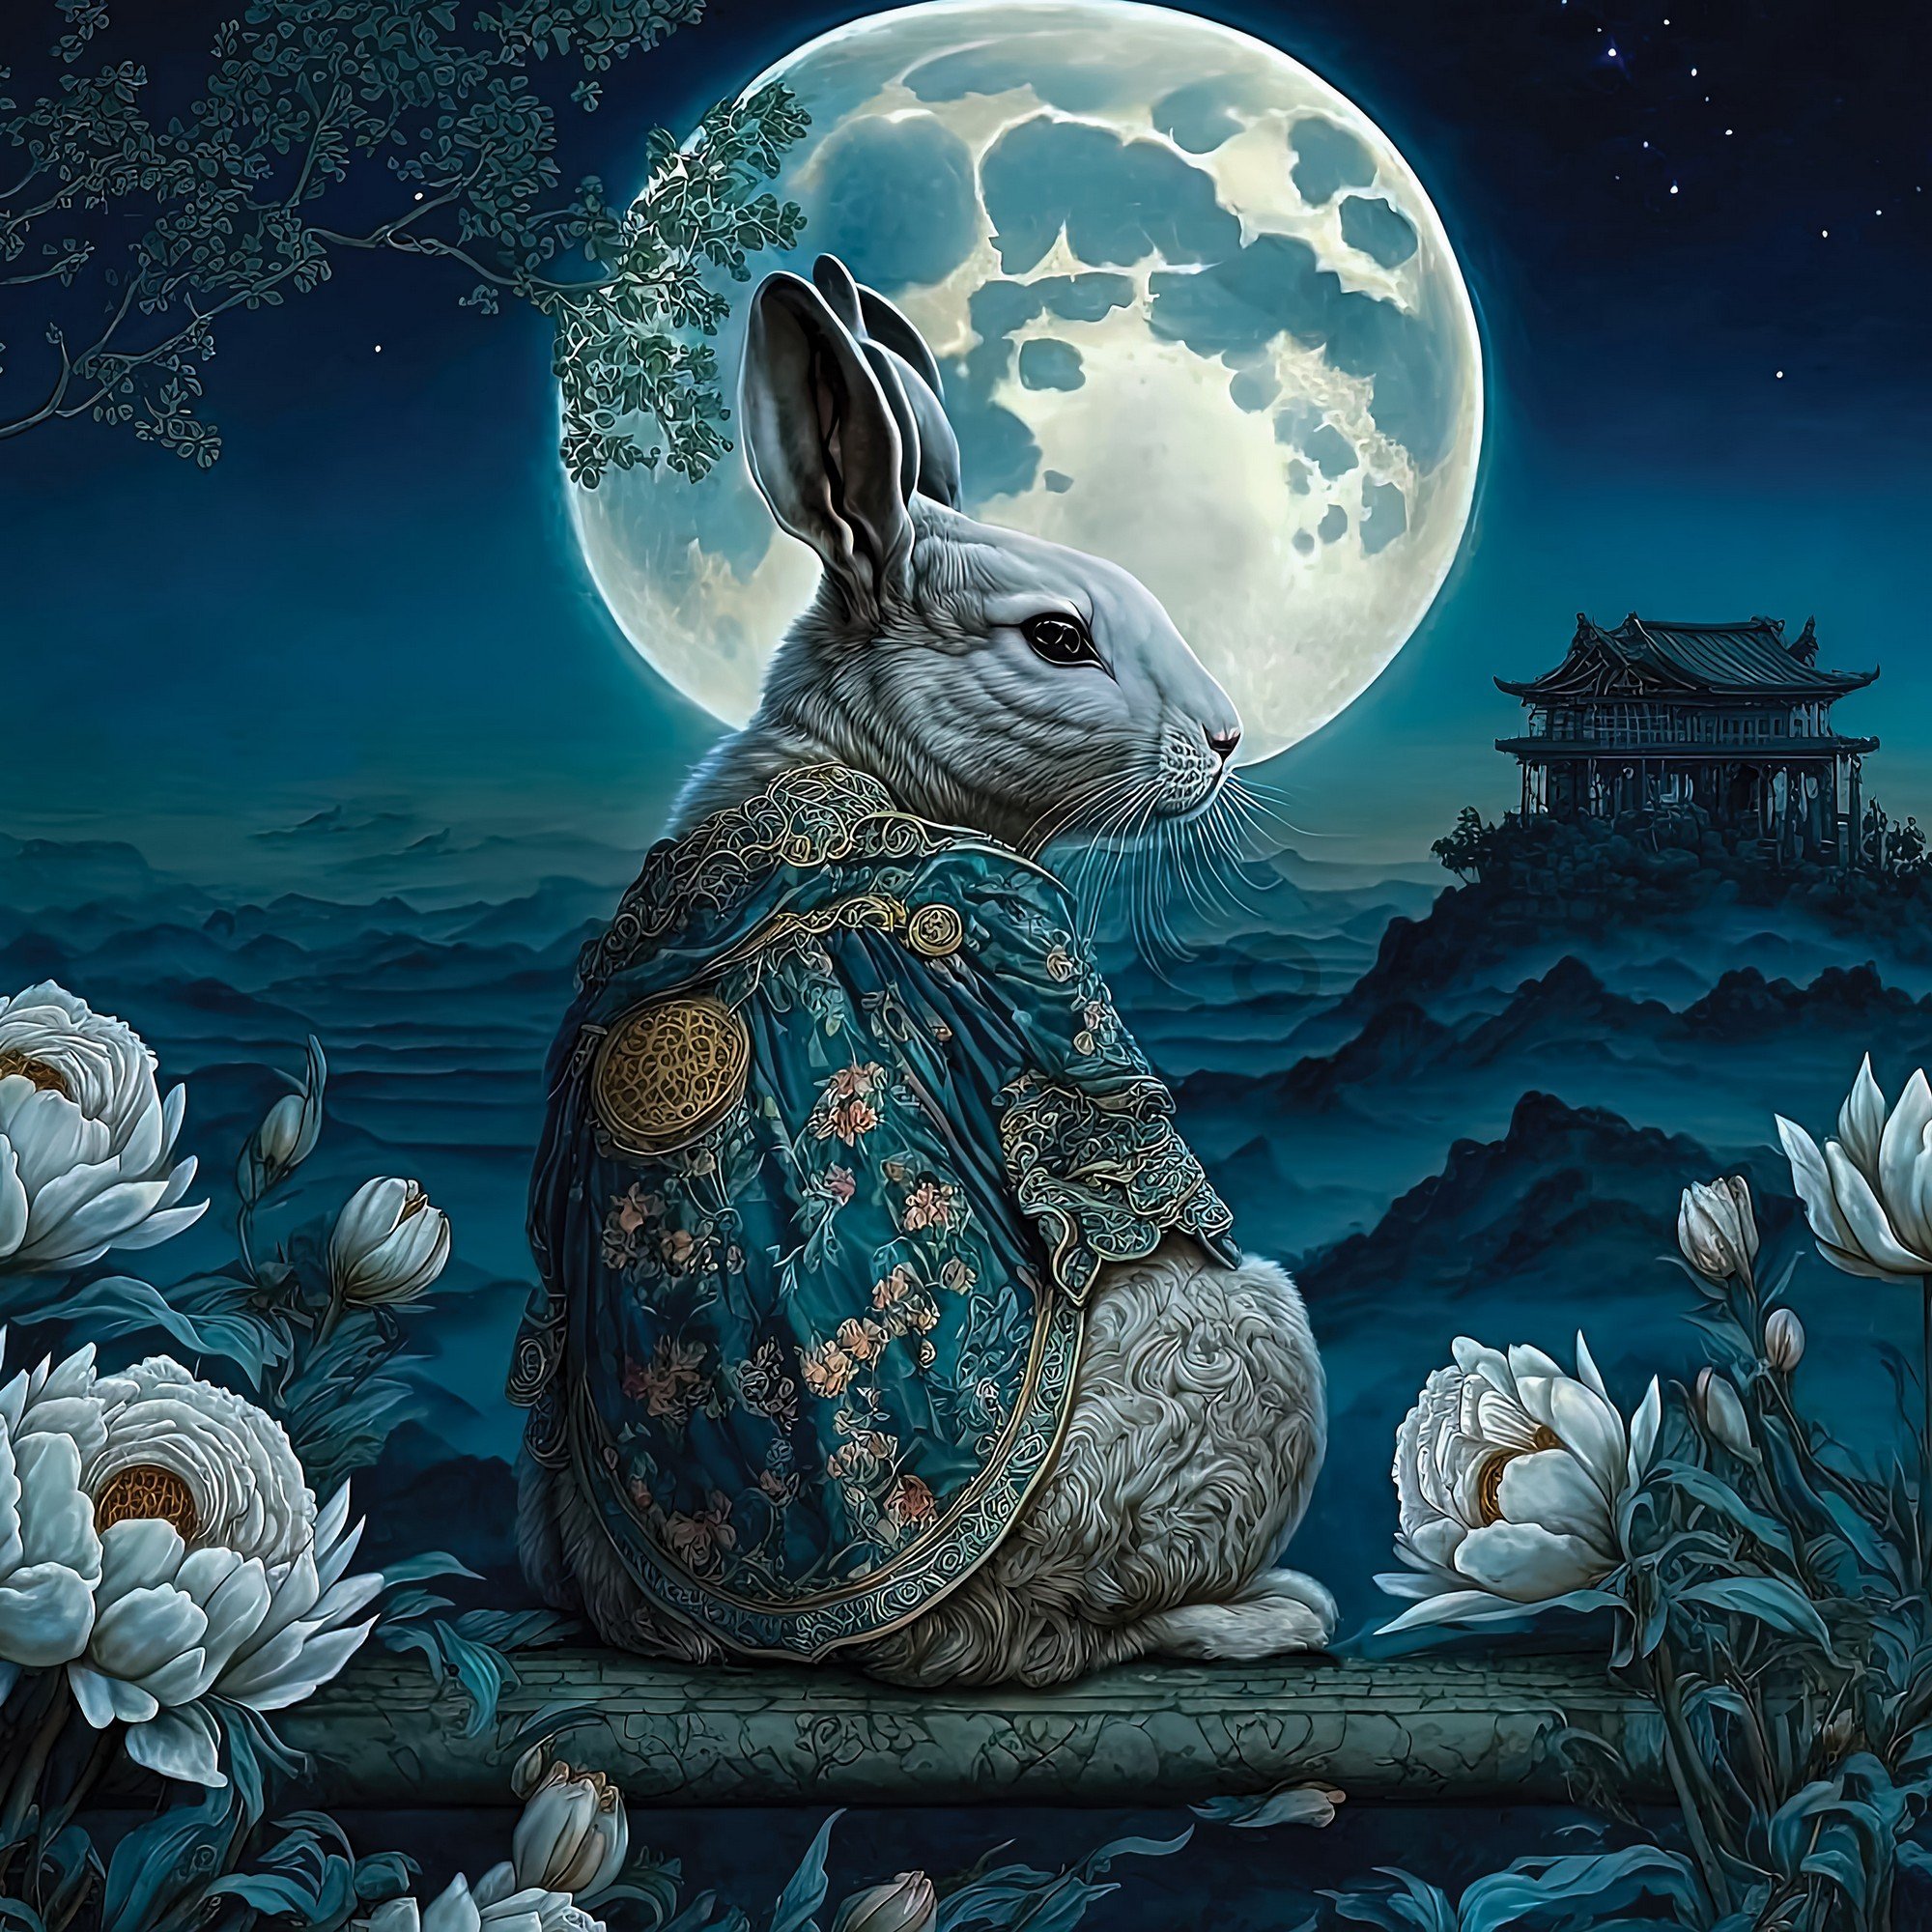 Fototapet vlies: Art Orient rabbit moon - 416x254 cm